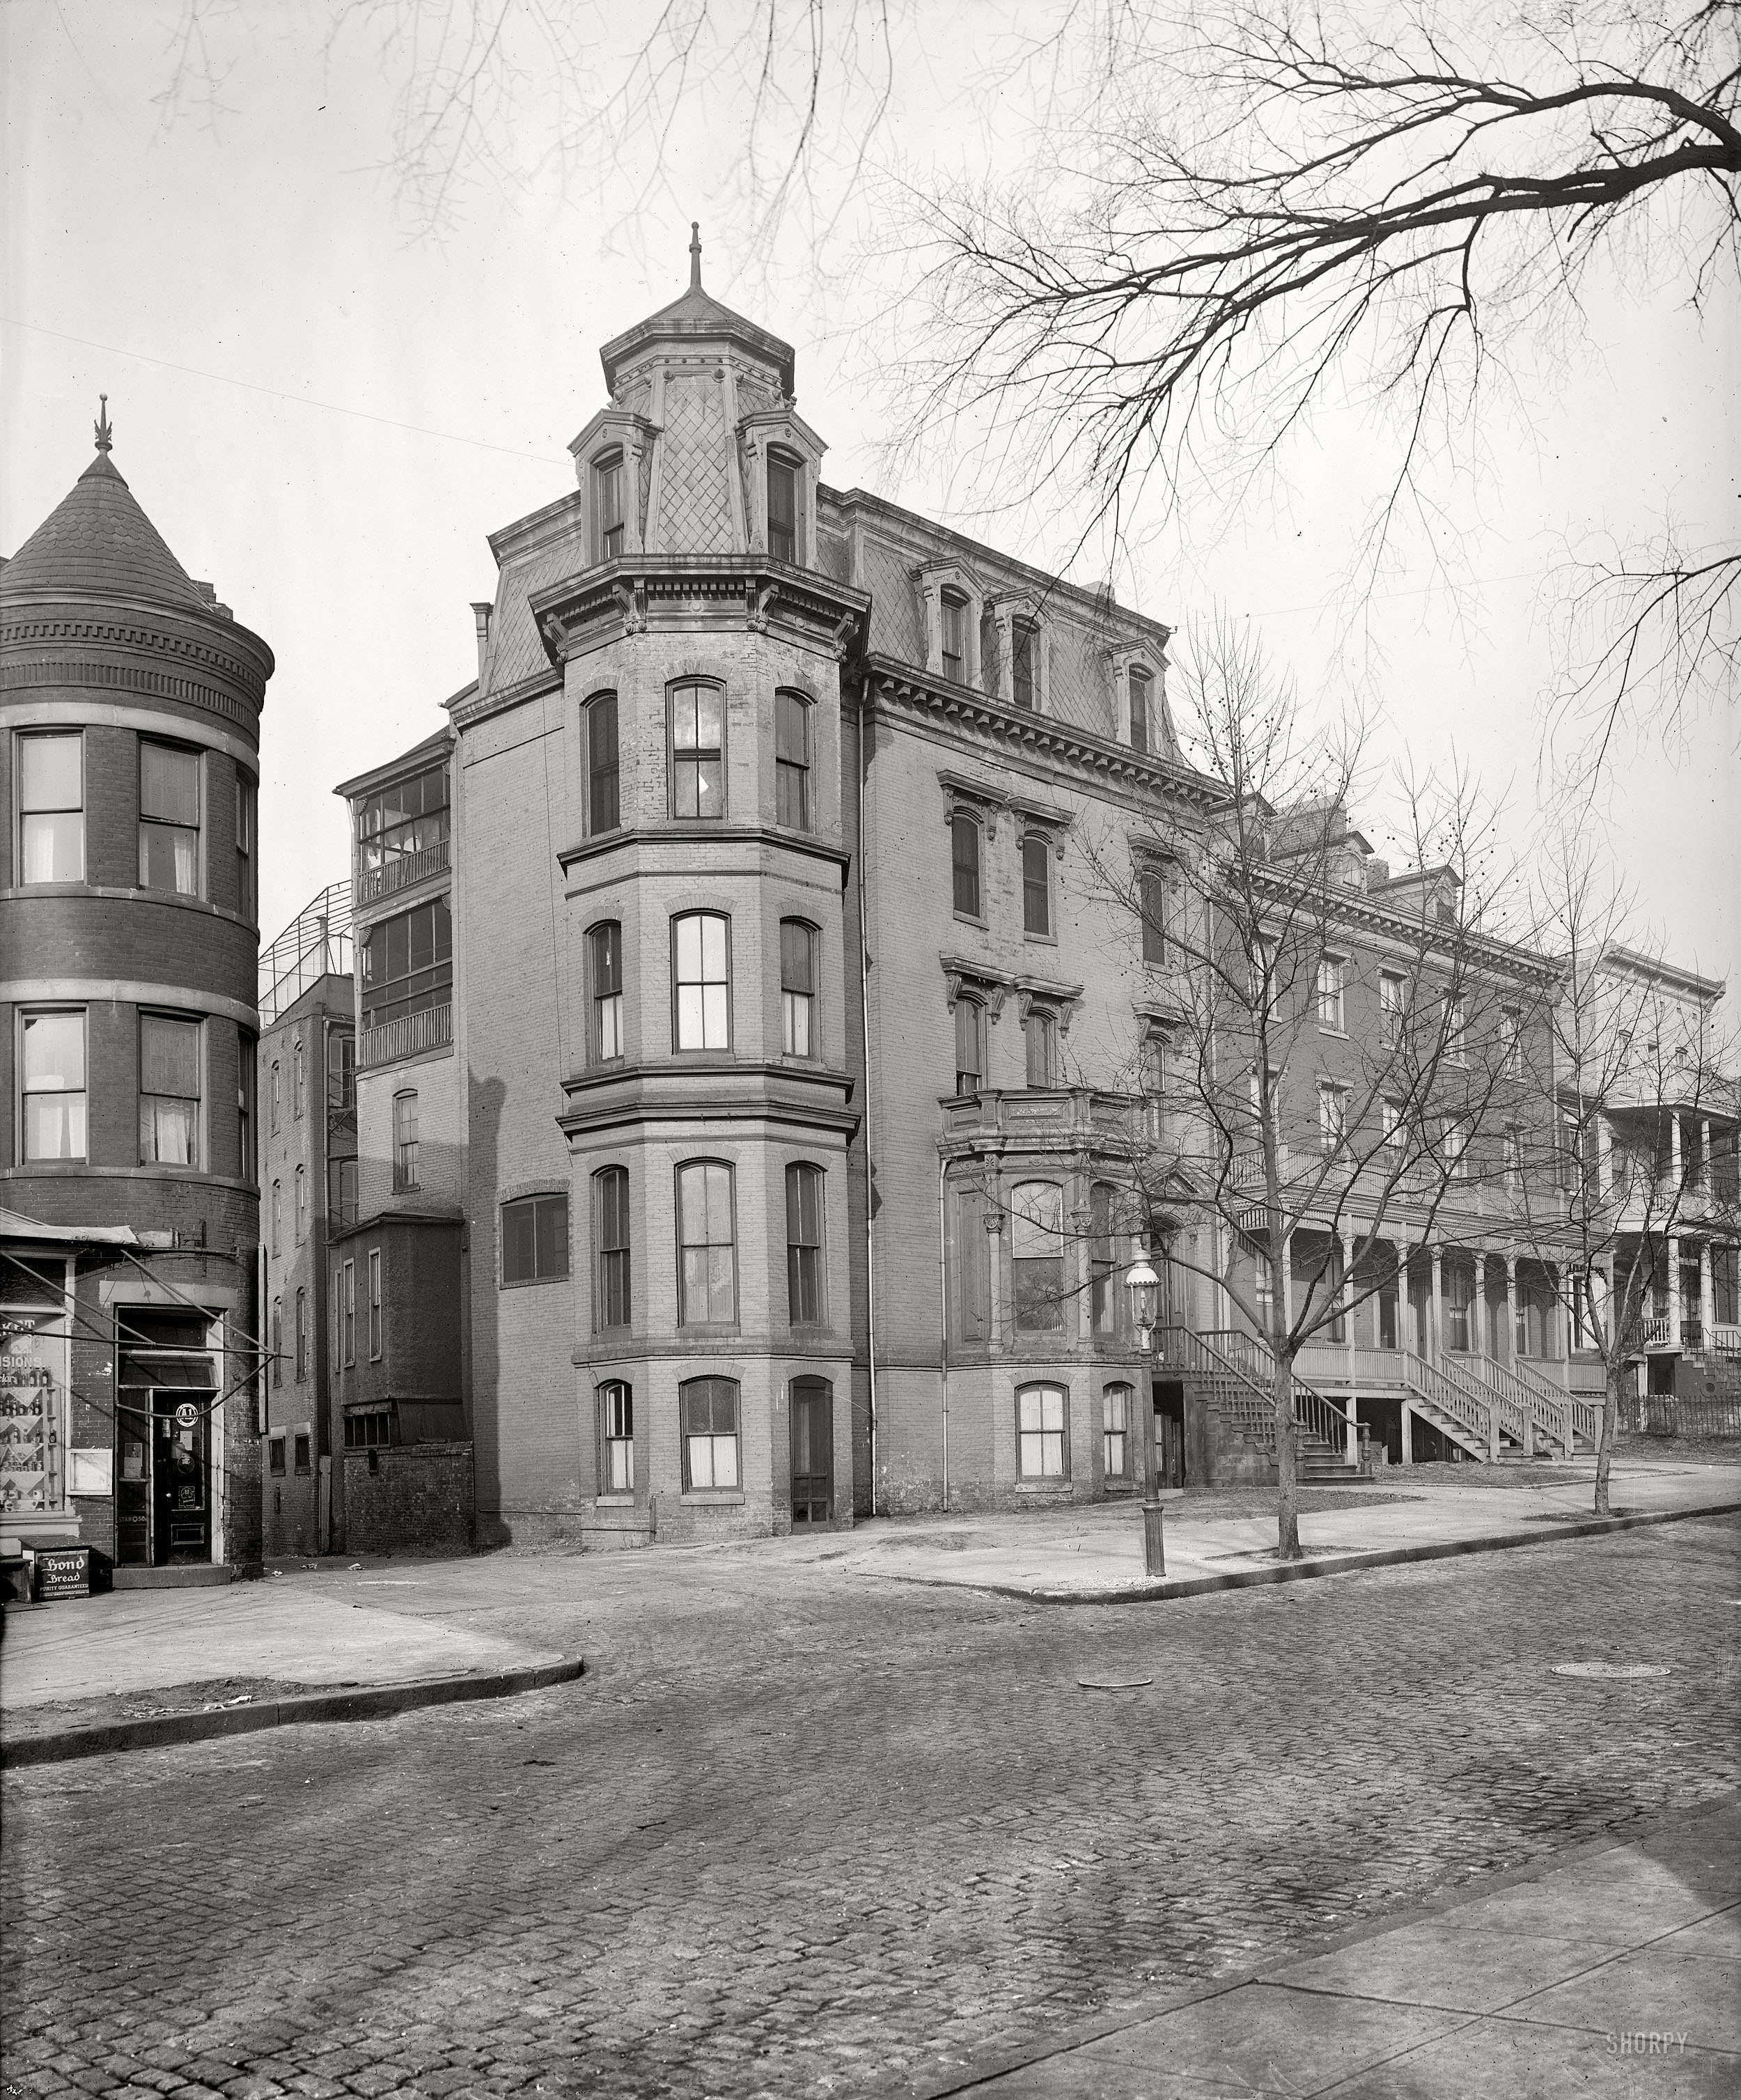 Washington, D.C., circa 1923. "Sherman house, 300 block Third Street N.W." National Photo Company Collection glass negative. View full size.